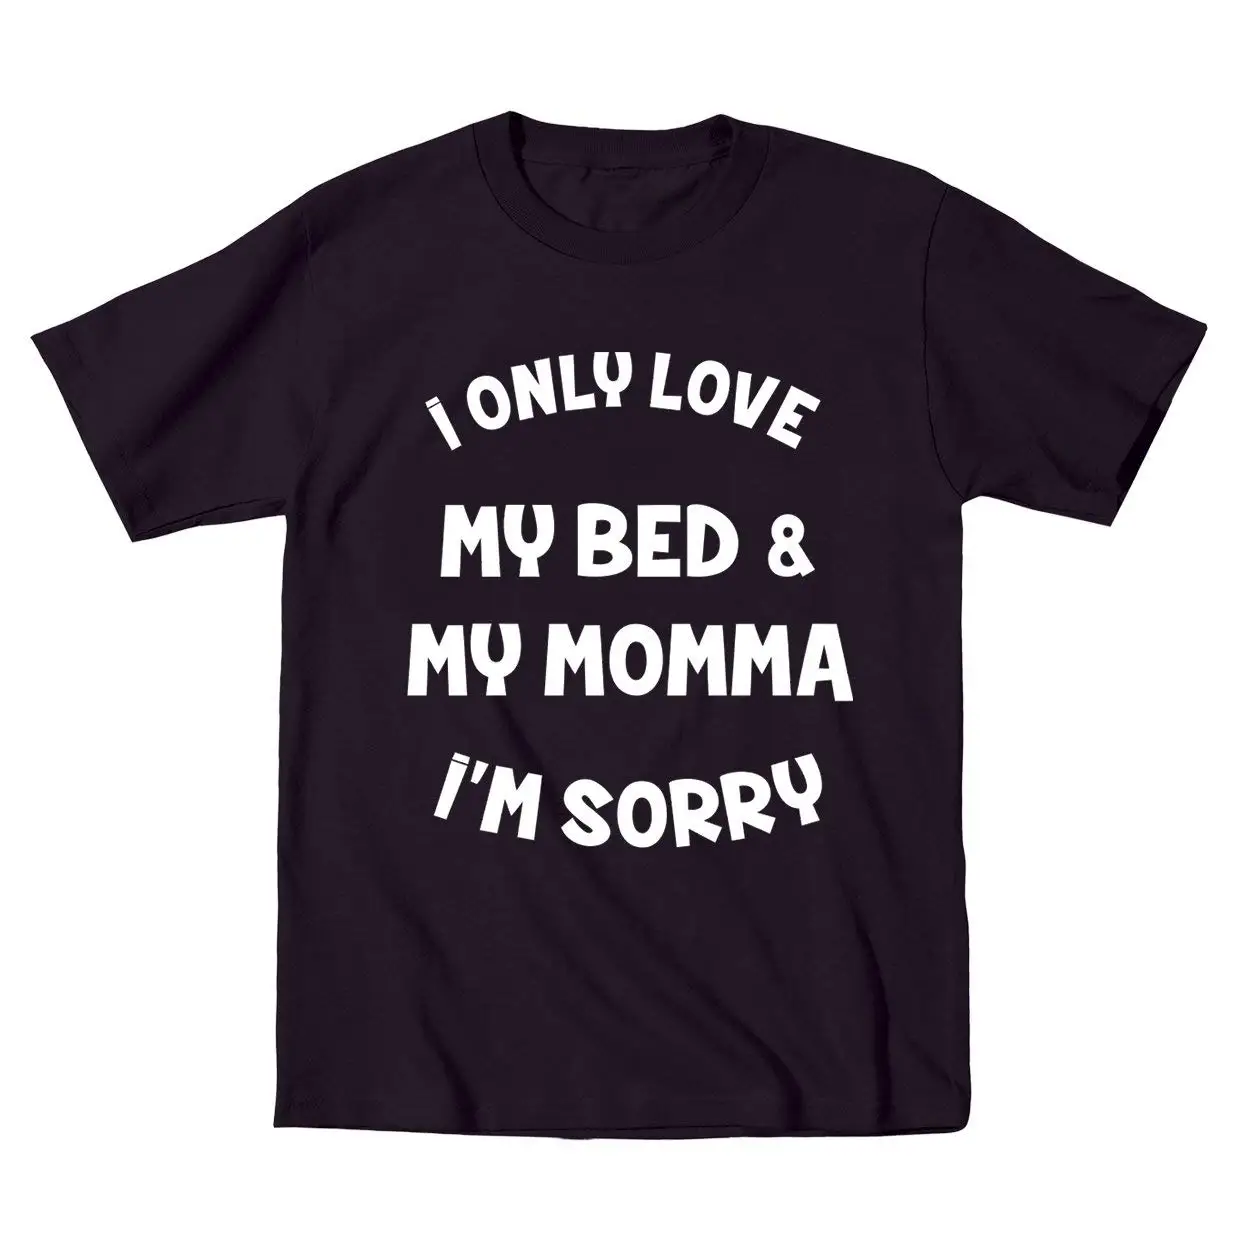 I love only me. Футболка sorry mom. Sorry girls i only Date models футболка. Sorry mom одежда. Футболка sorry mom Sella.